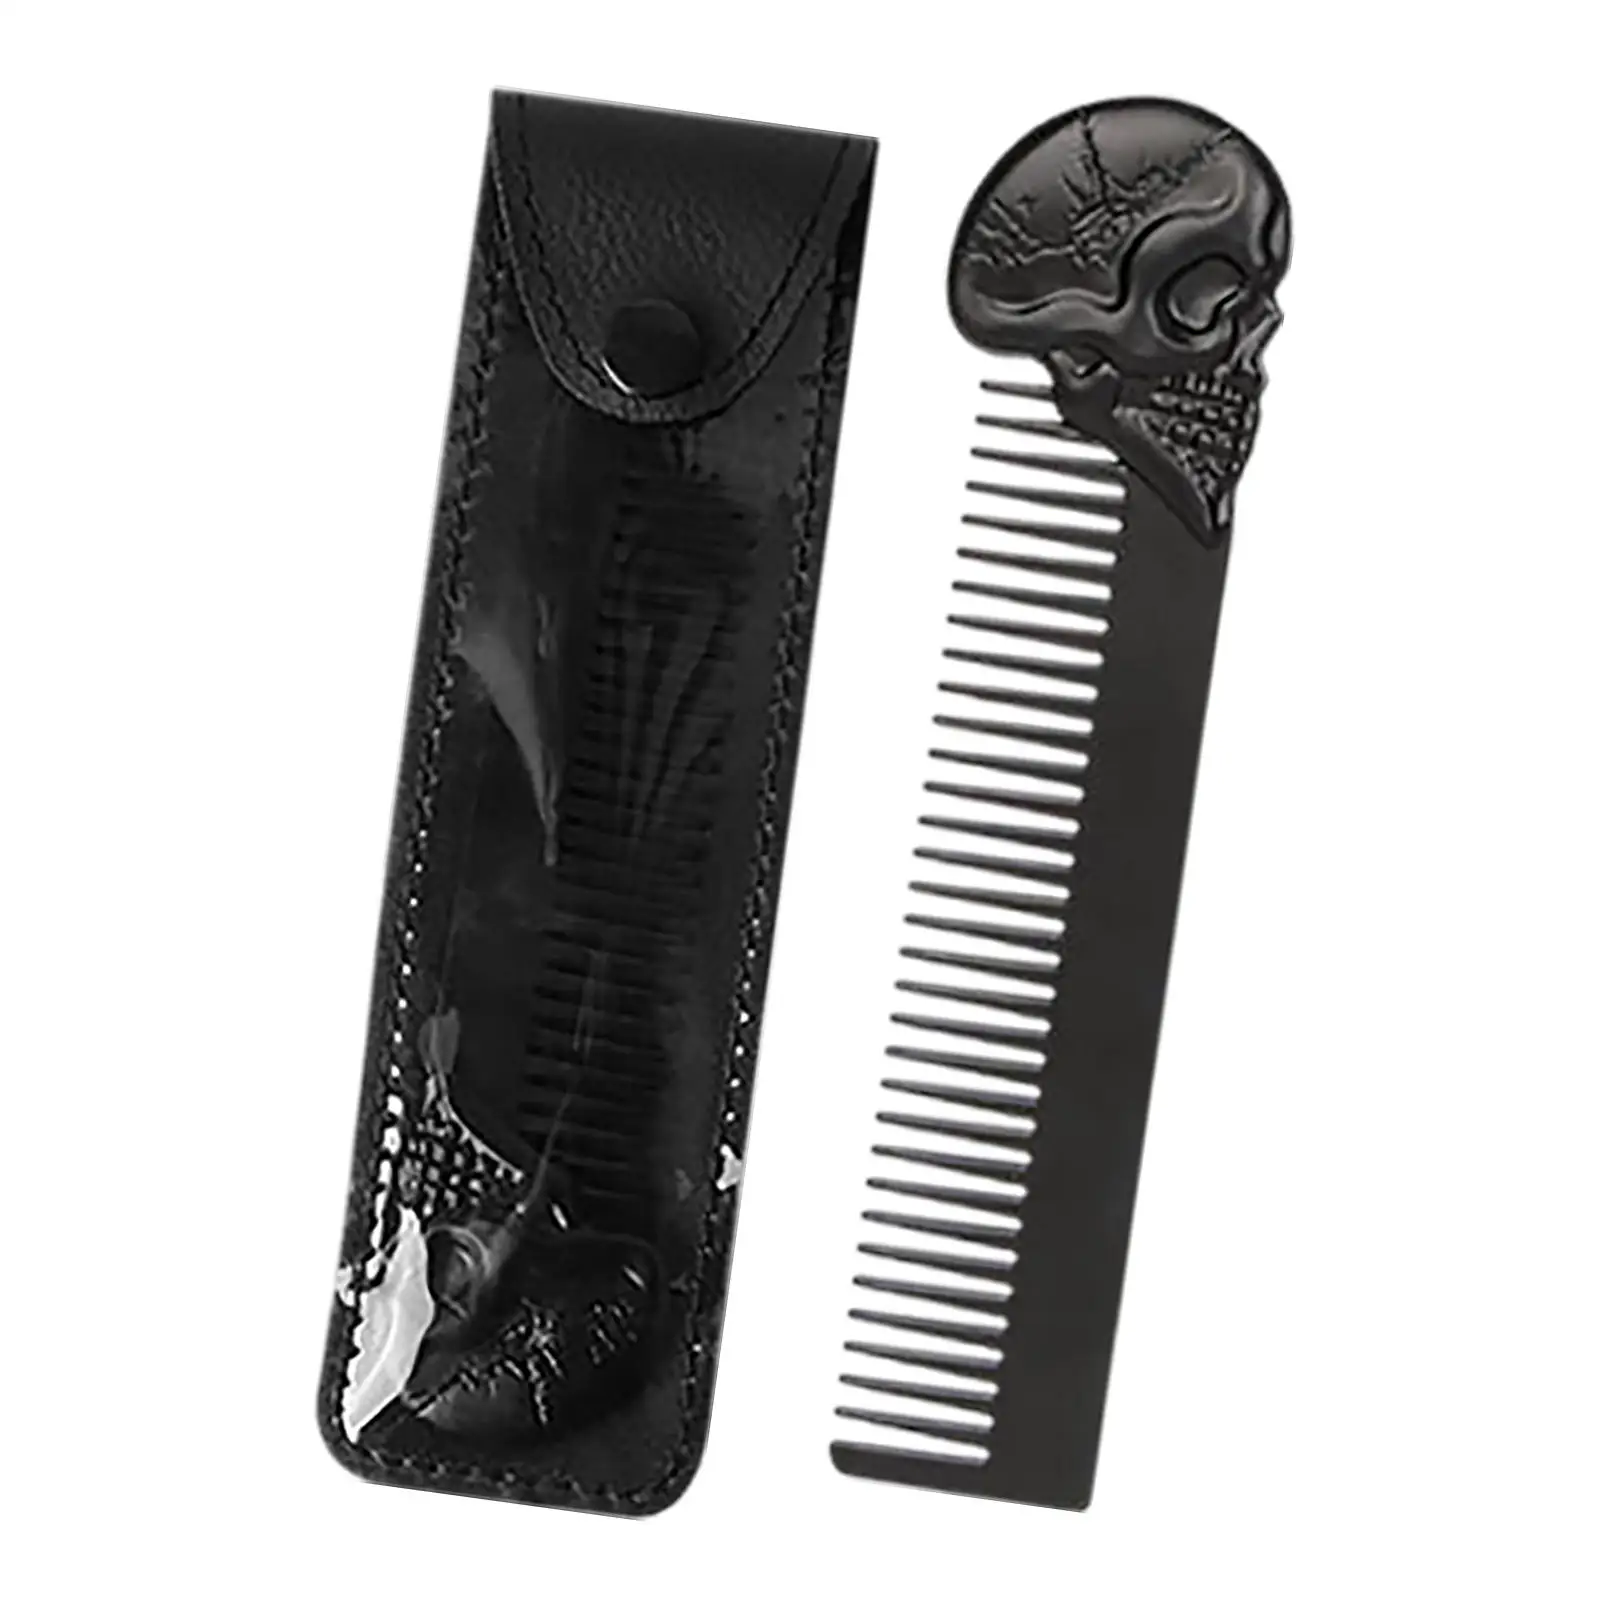   Comb for Men Fine Beard Shaping Alloy Trim Tool Barber